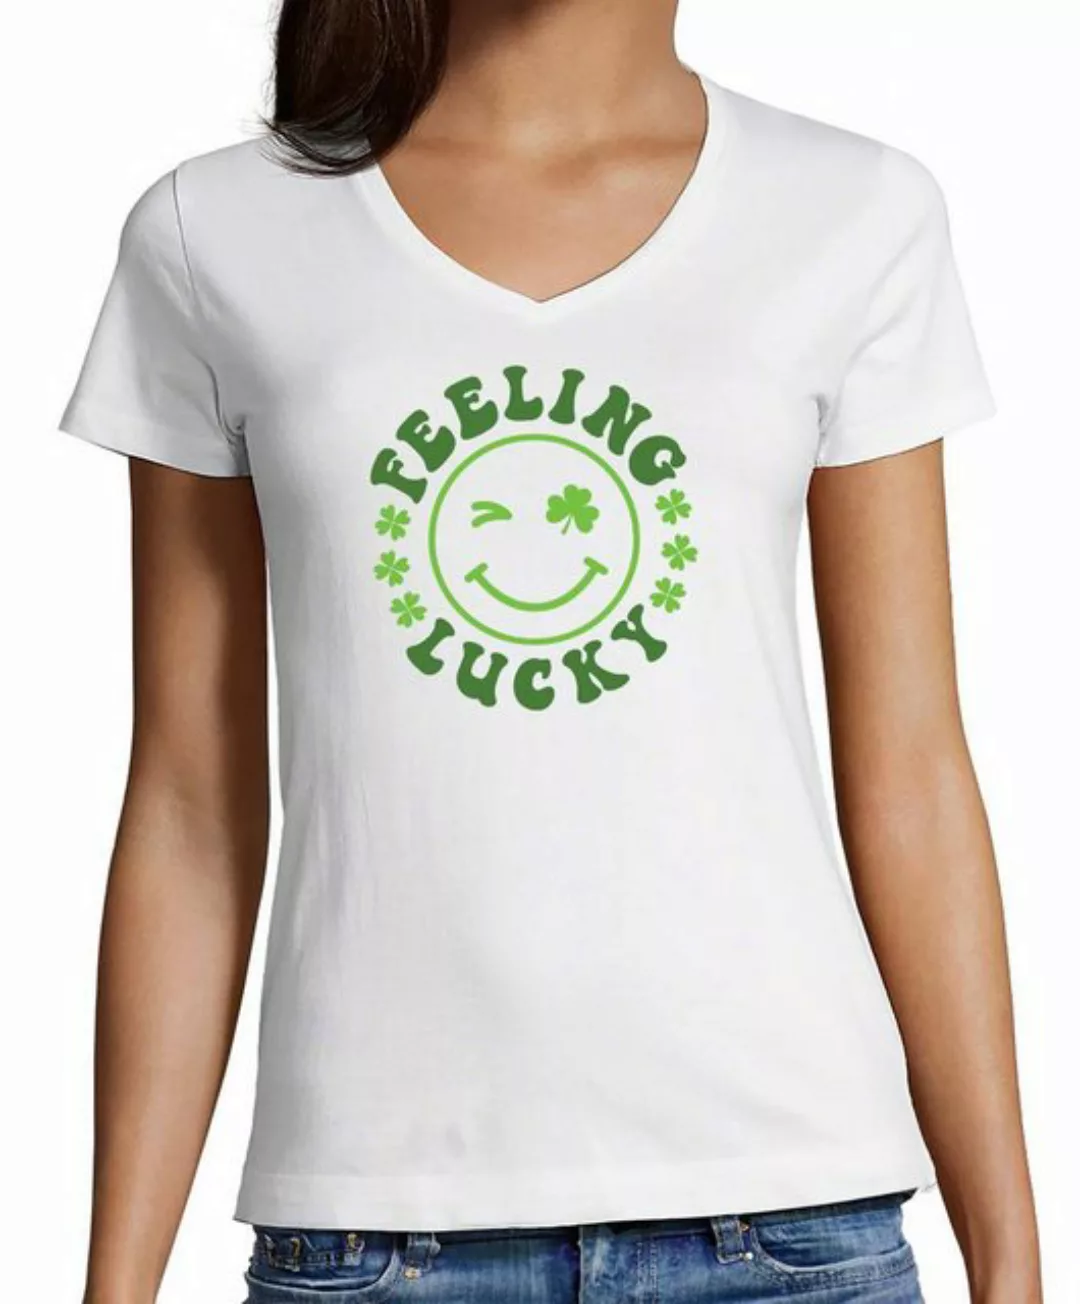 MyDesign24 T-Shirt Damen Smiley Print Shirt - Zwinkernder Smiley Feeling Lu günstig online kaufen